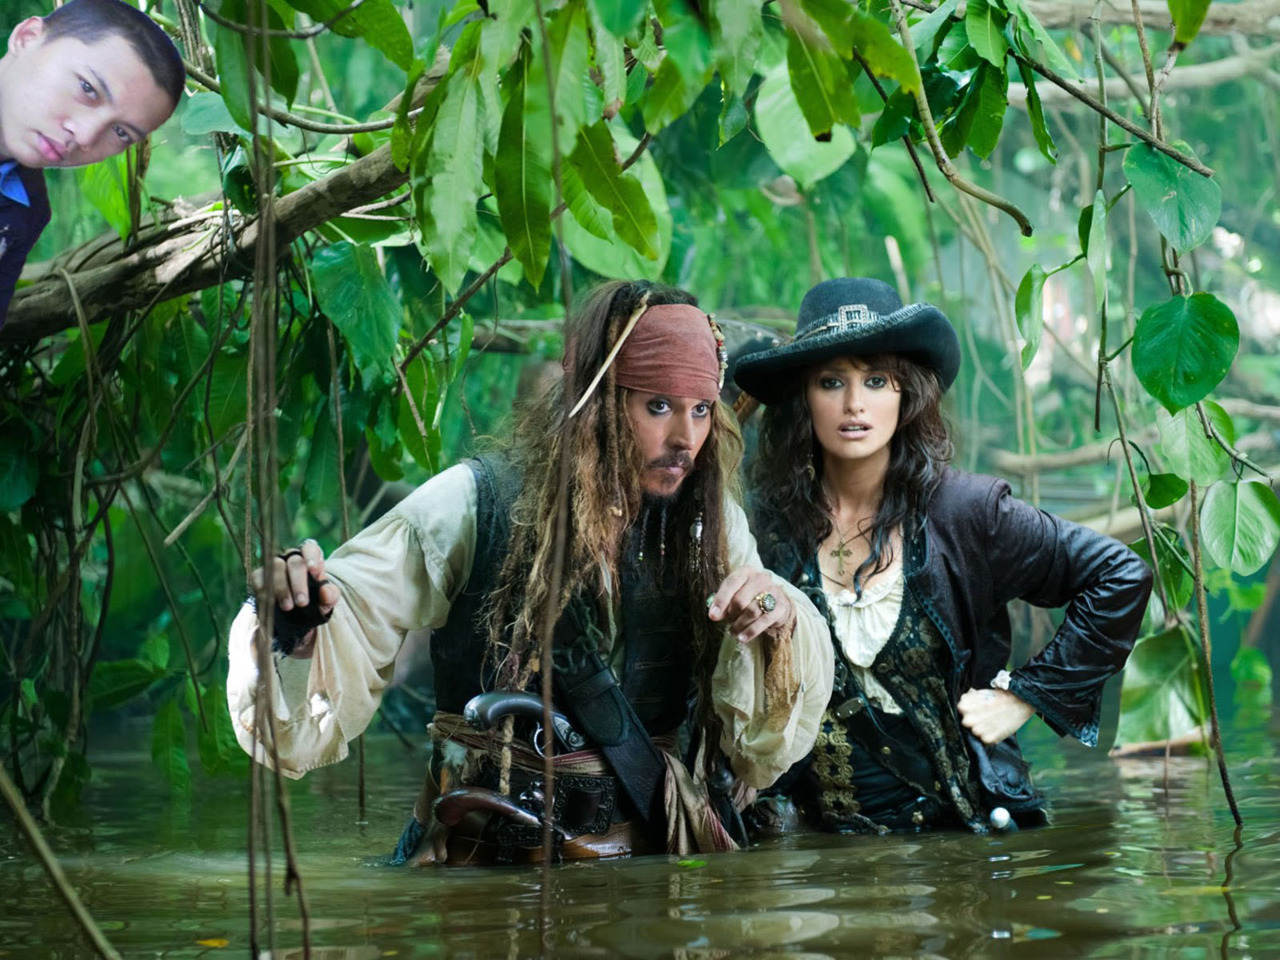 Pirates on deck